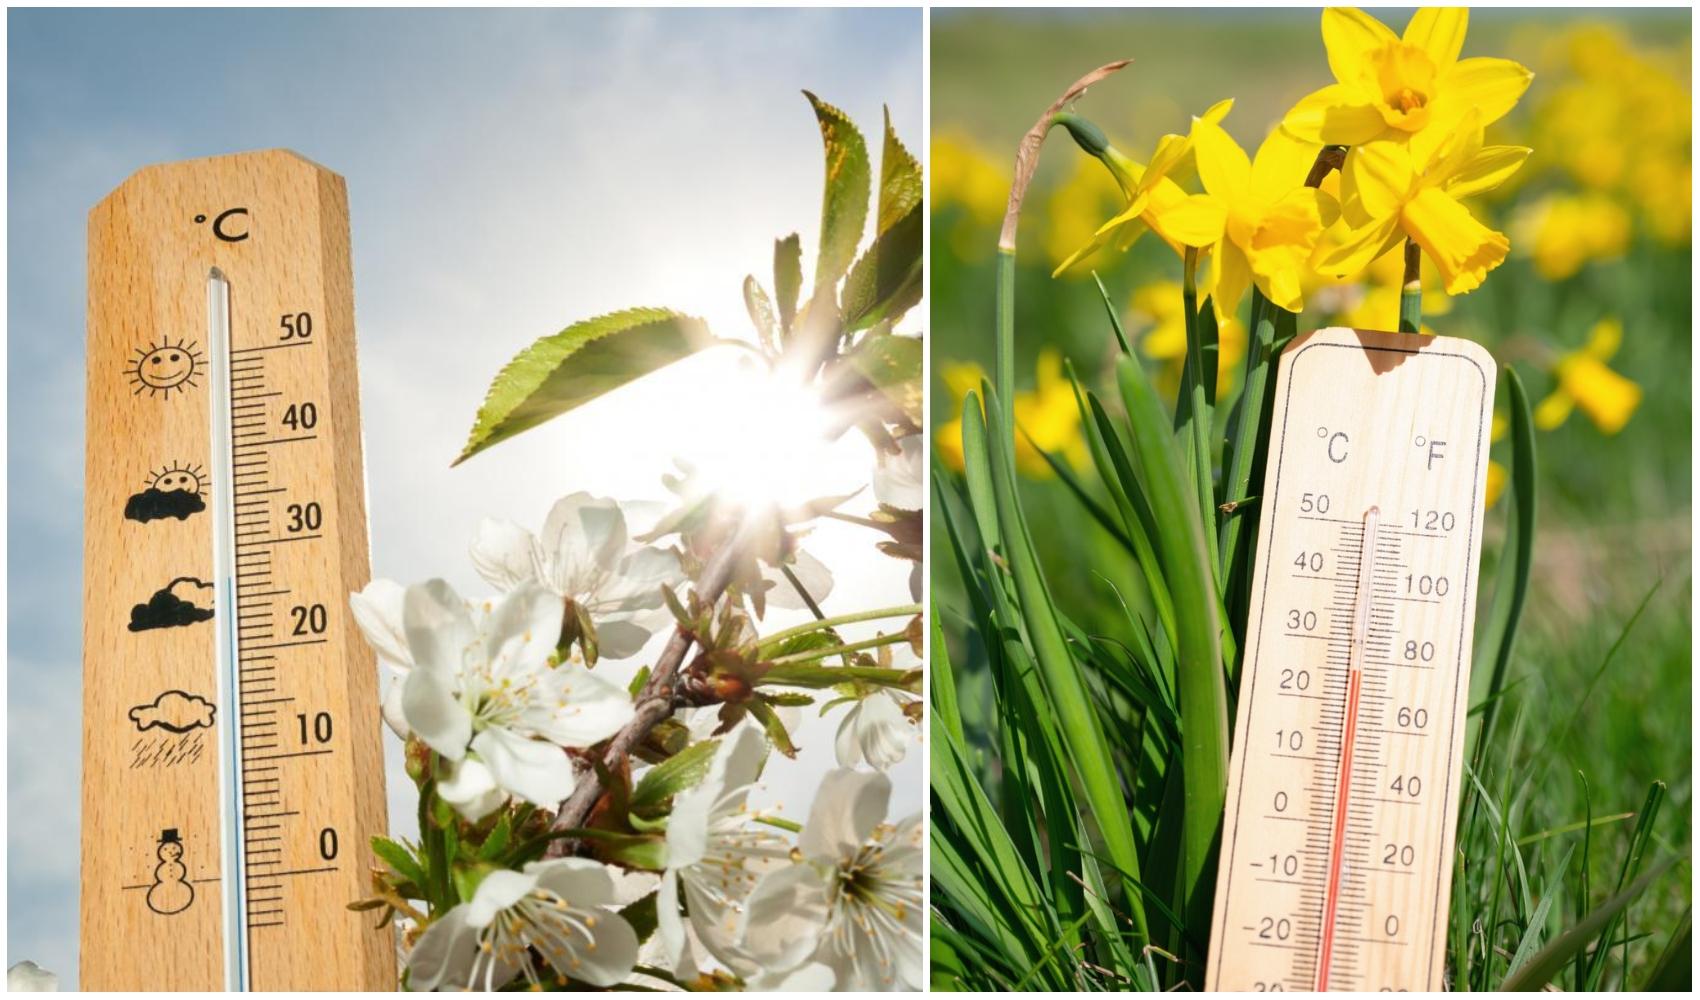 colaj foto cu termometru pentru prognoza meteo si flori de primavara